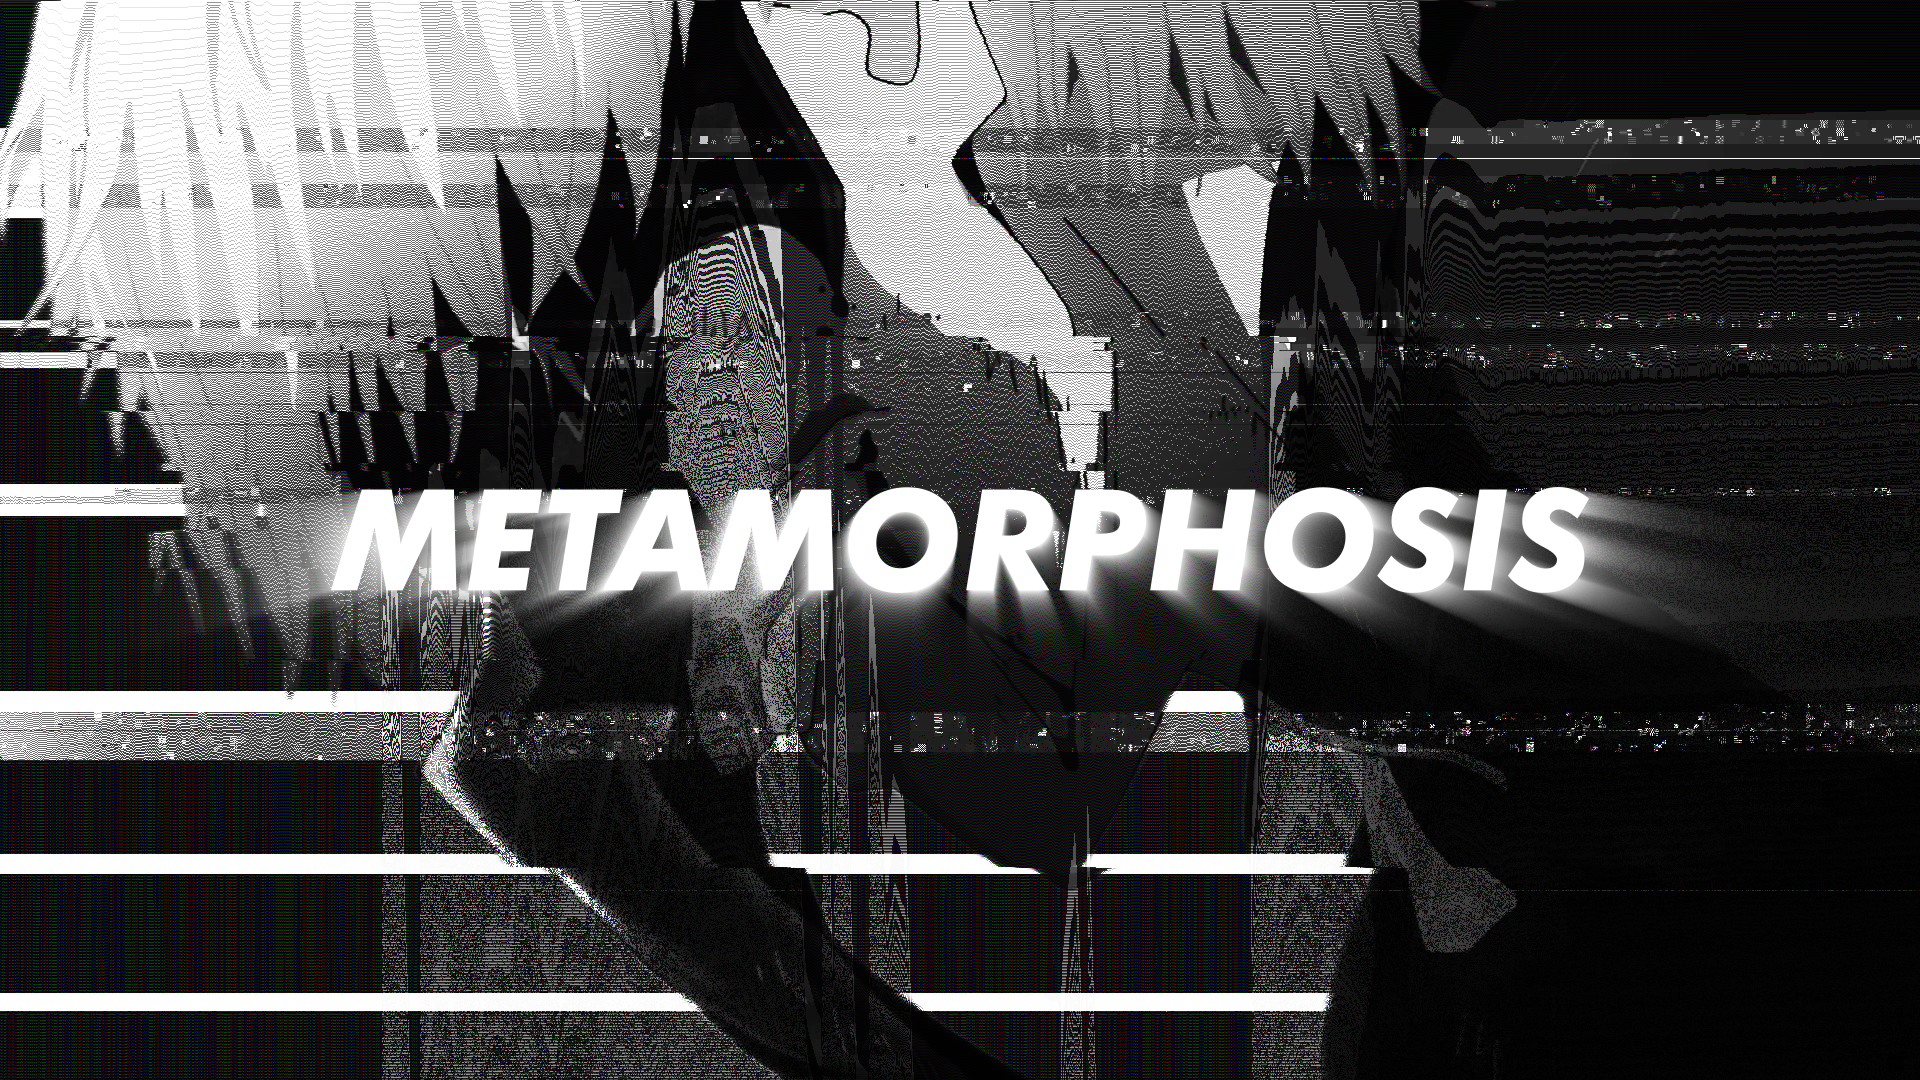 metamorphosis manga cover